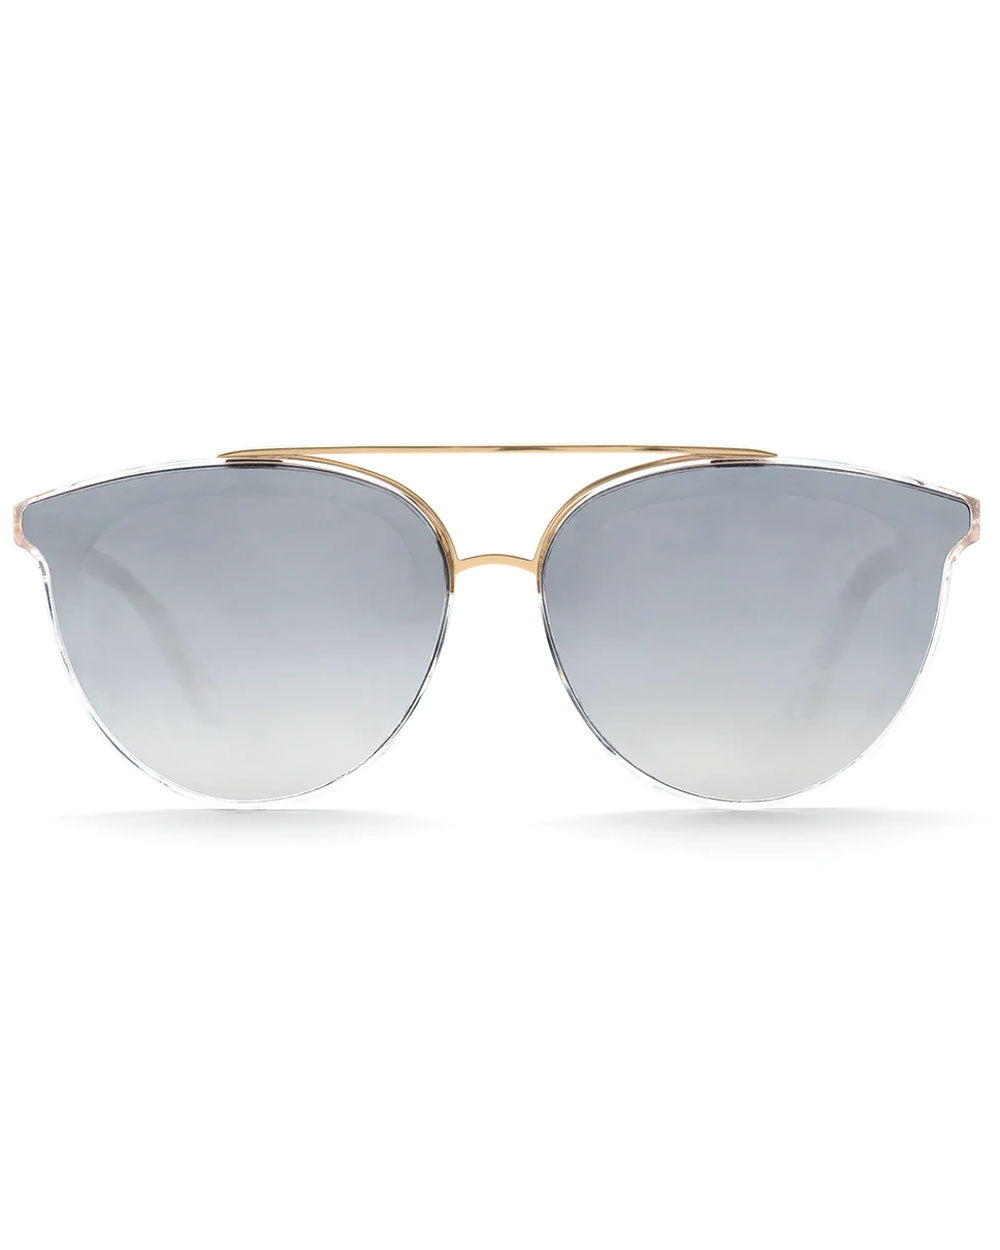 Clio Nylon Sunglasses in Crystal 24K